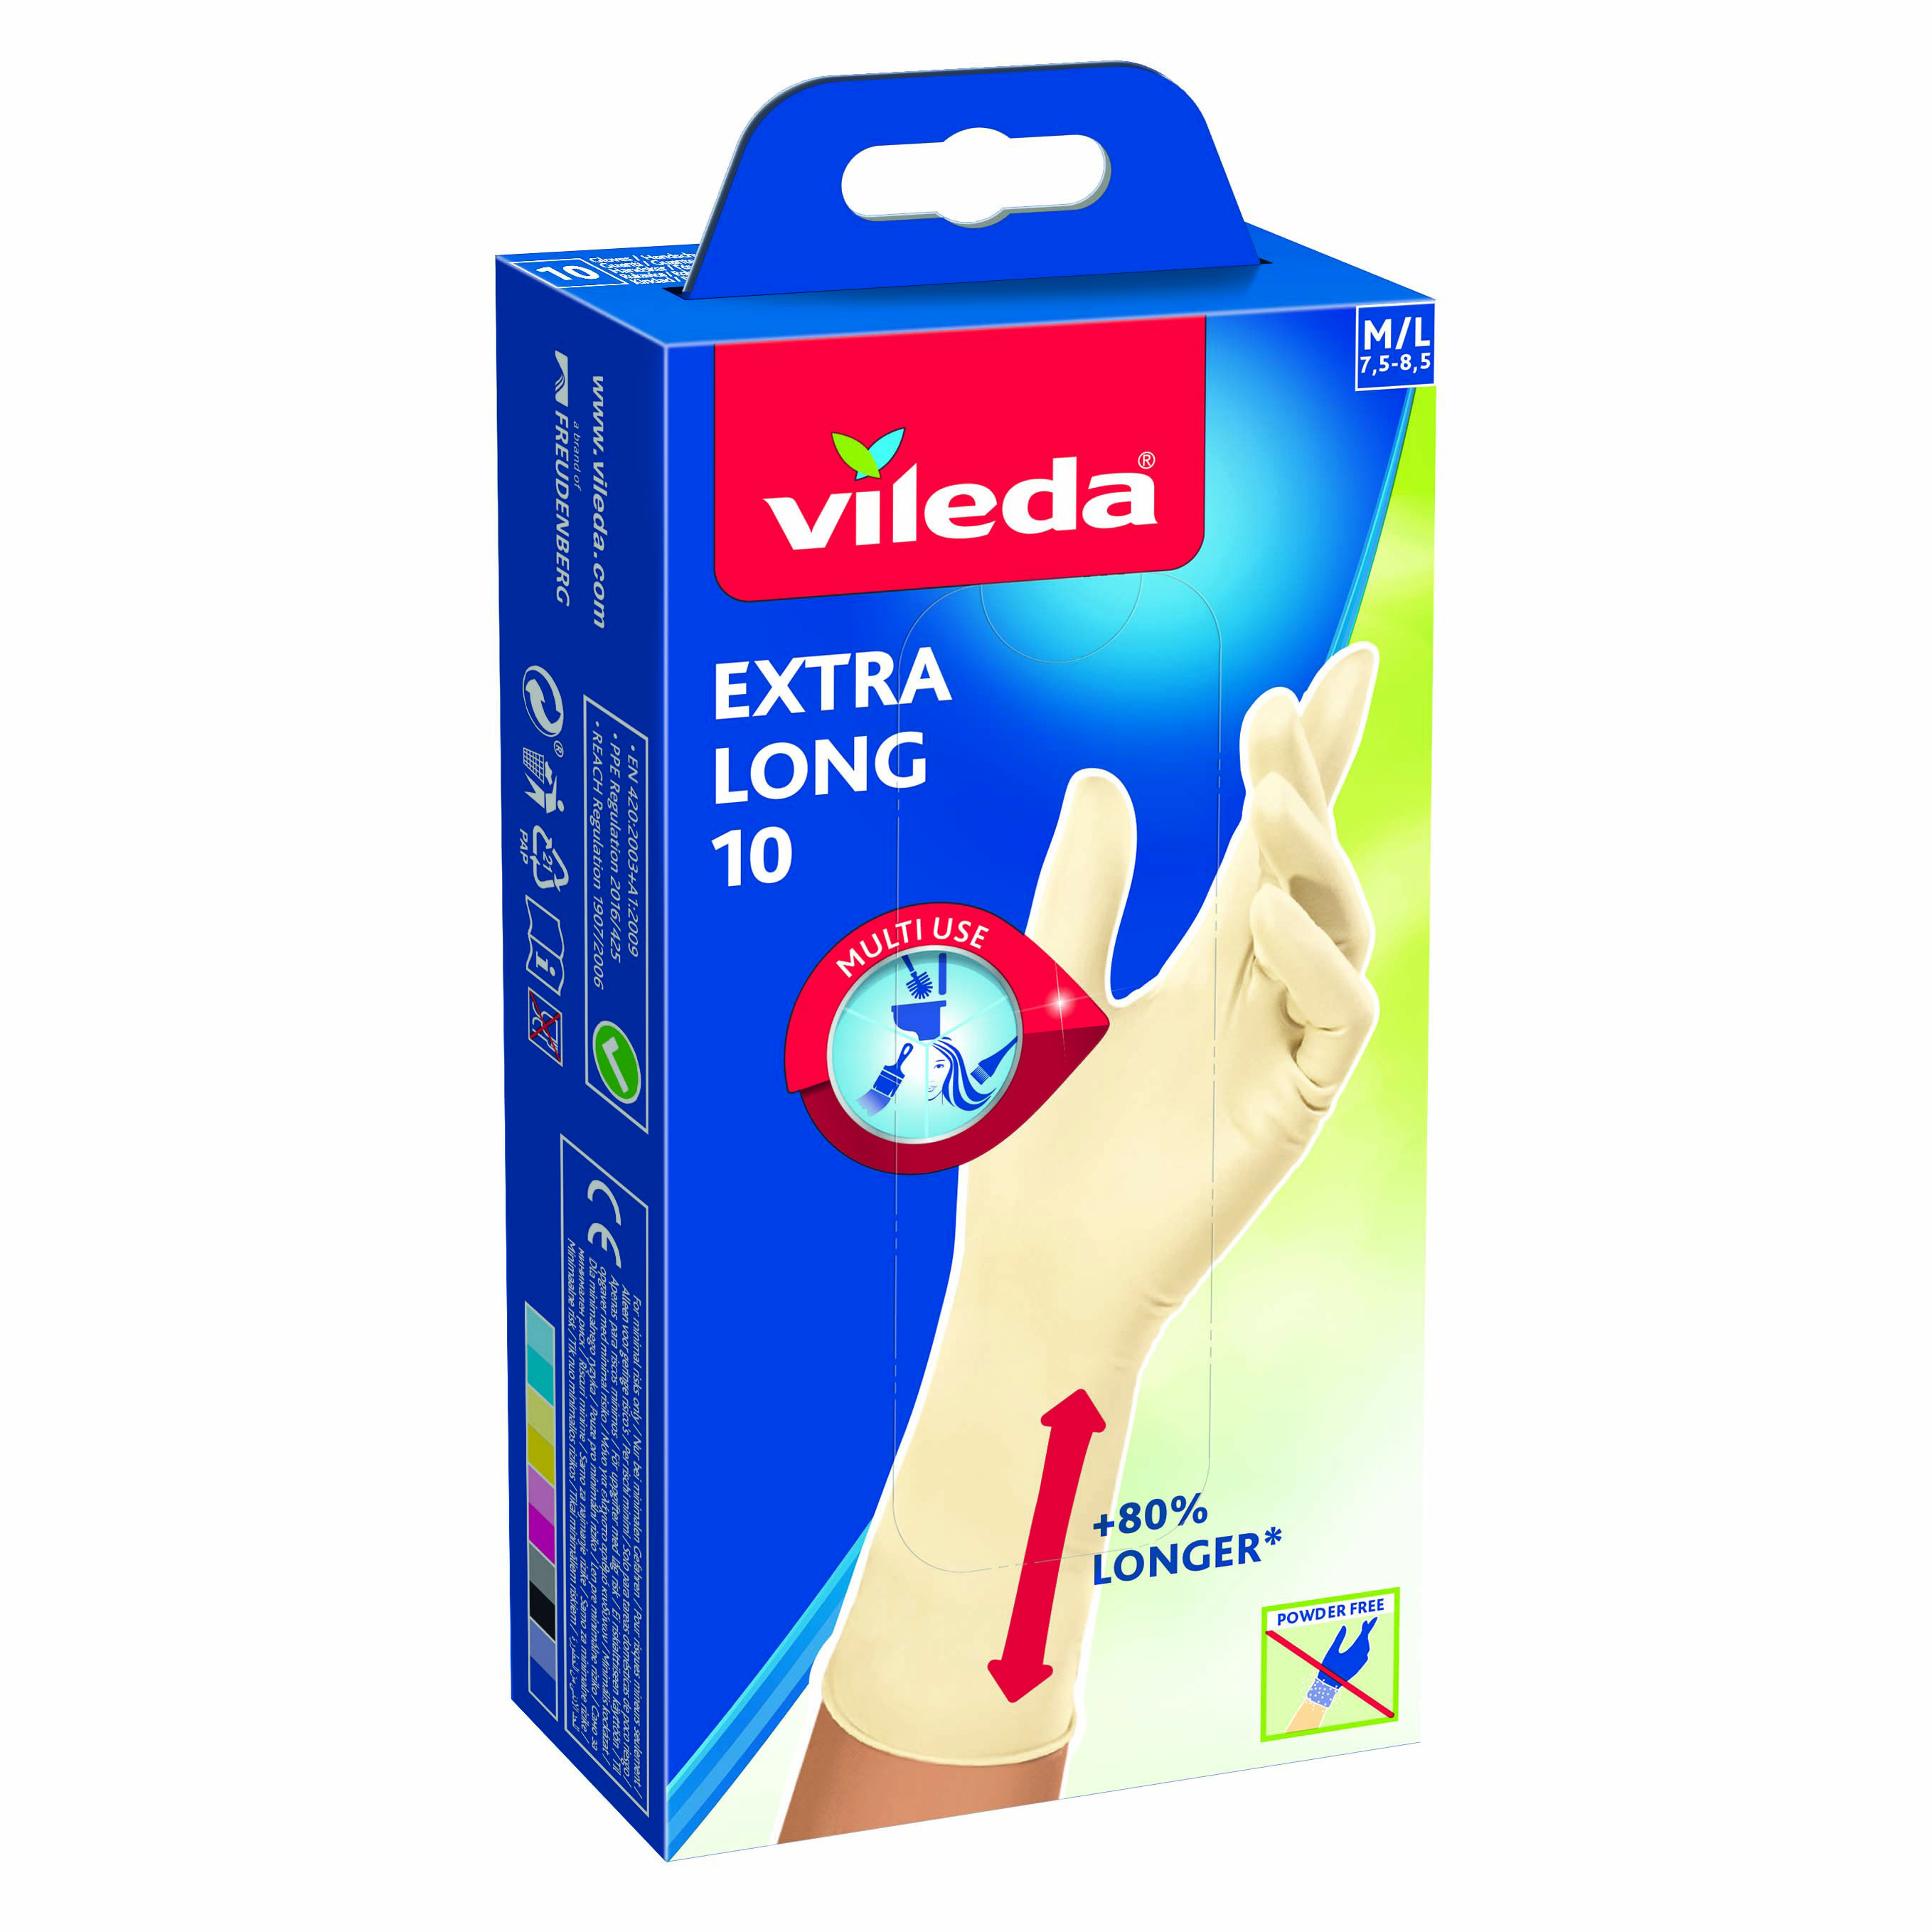 VILEDA Handschuhe Haushalt Extra Long 10 M/L 